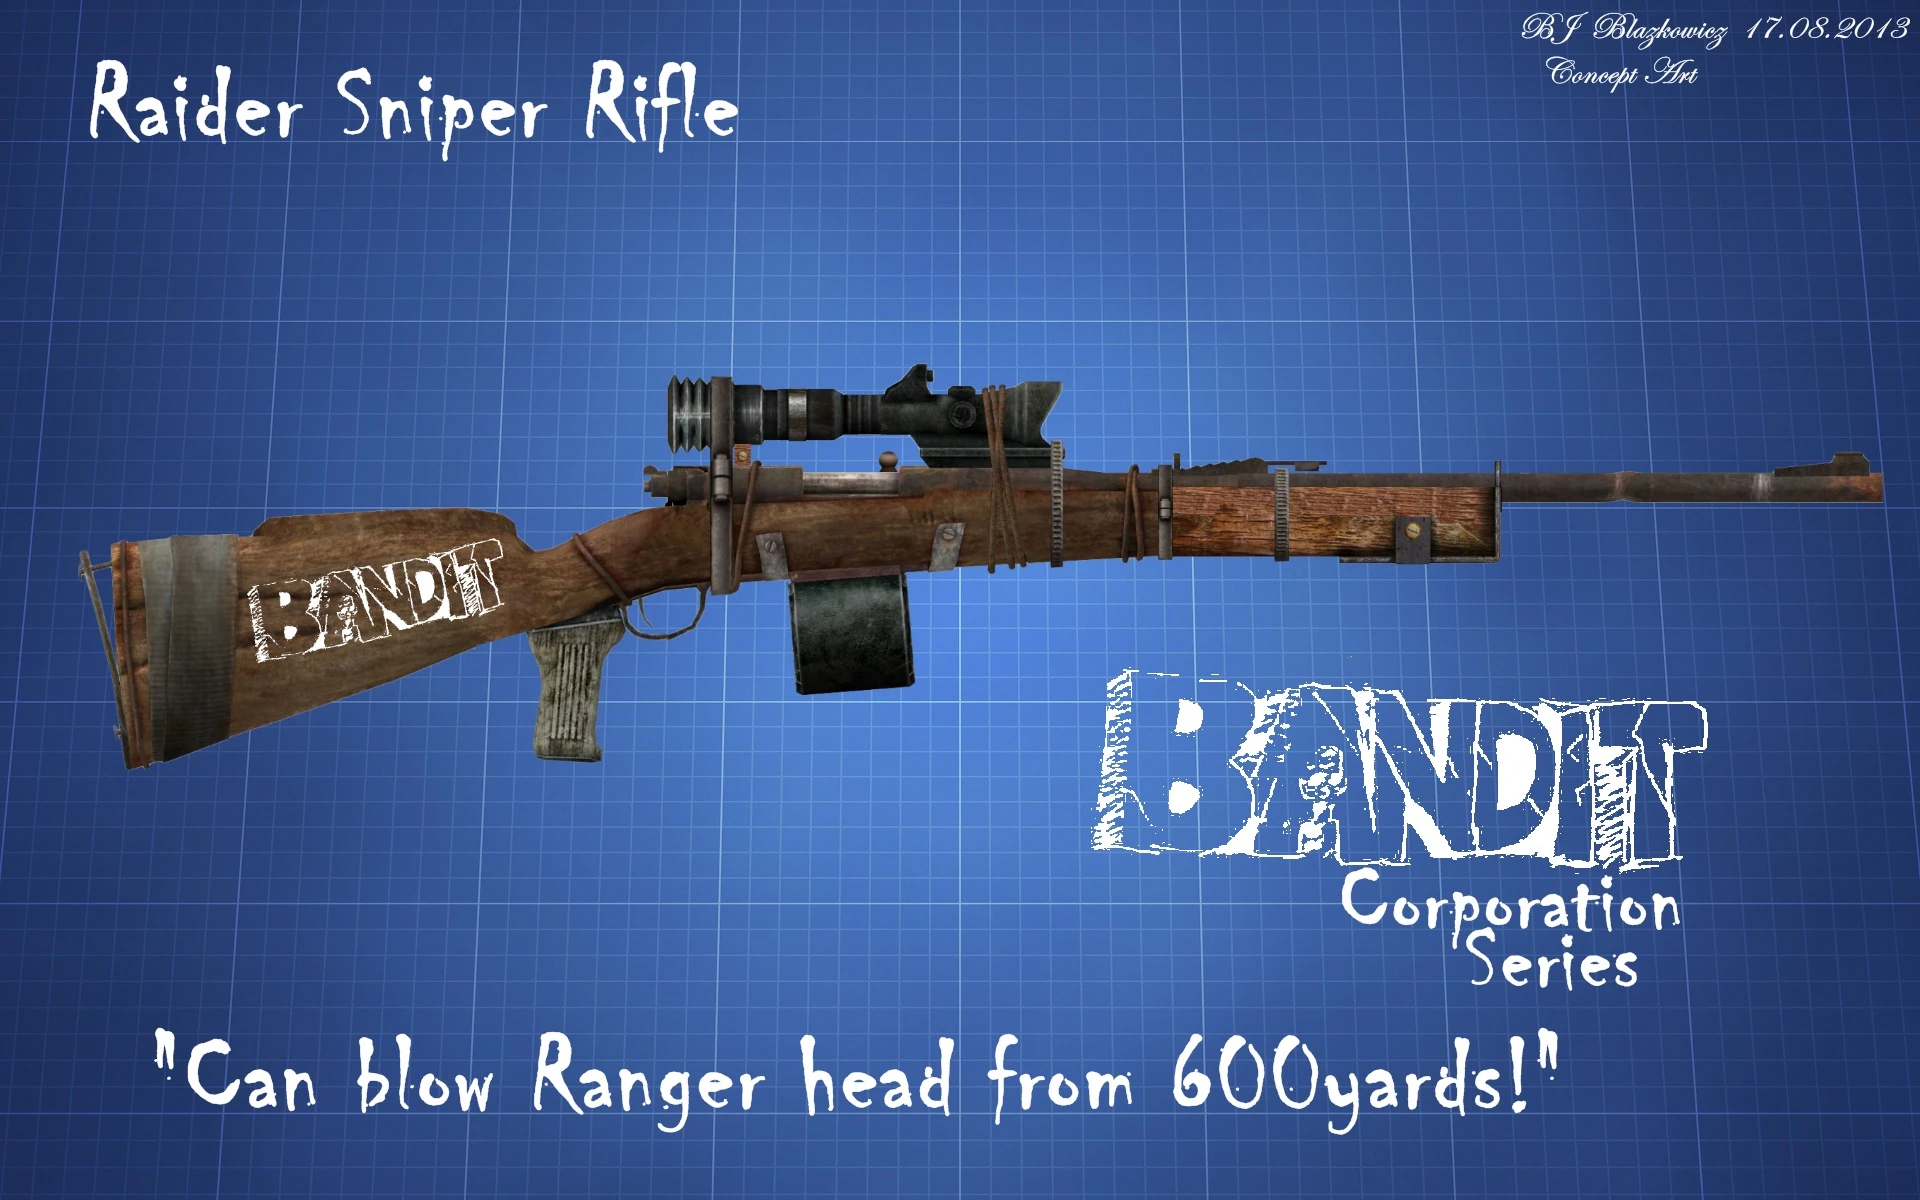 fallout new vegas sniper rifle